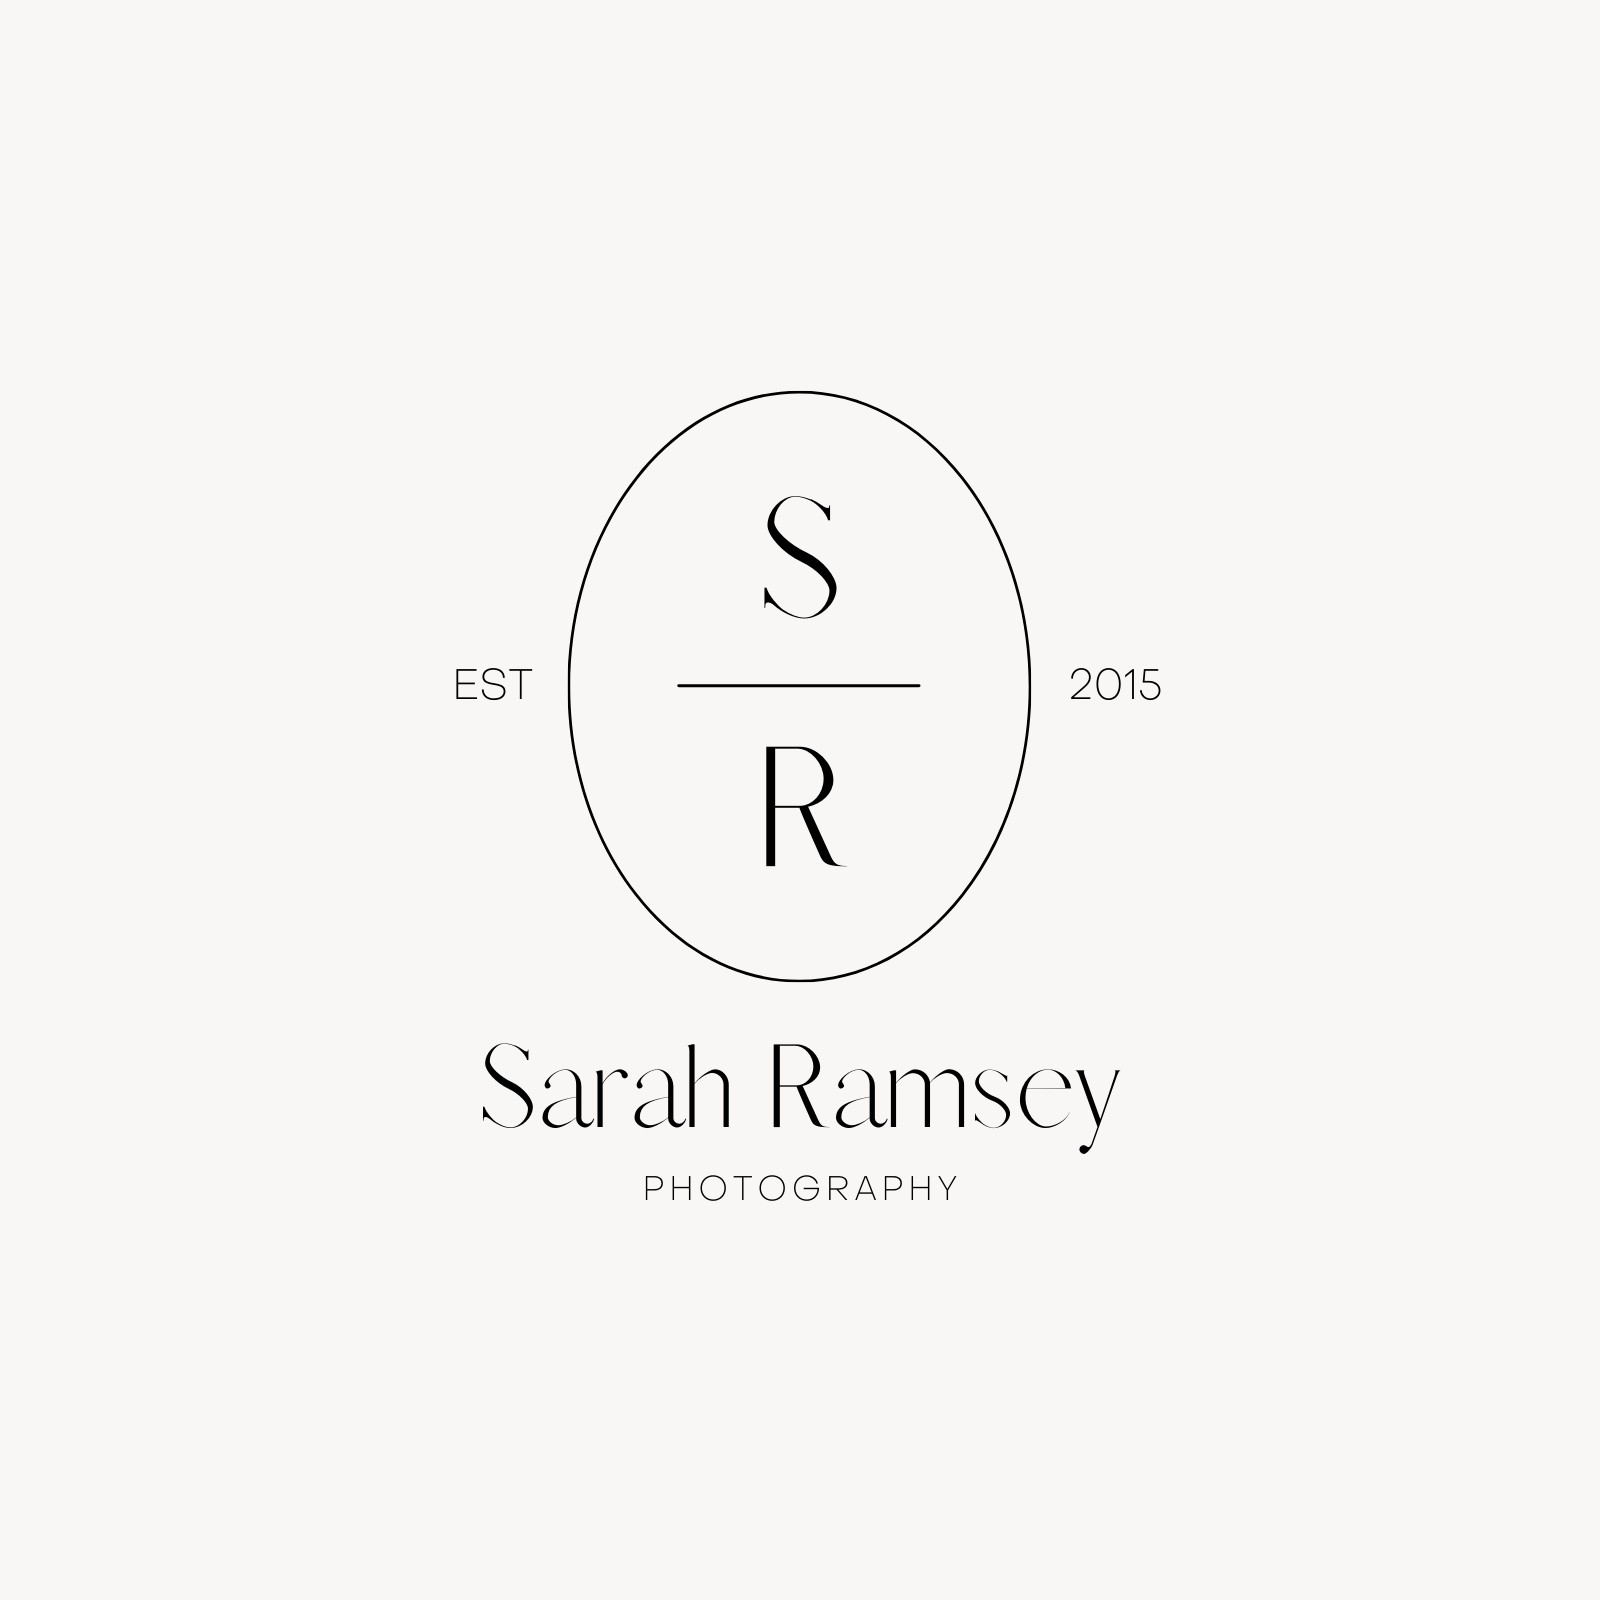 SR.Photography's link in bio | Instagram and socials | Linktree